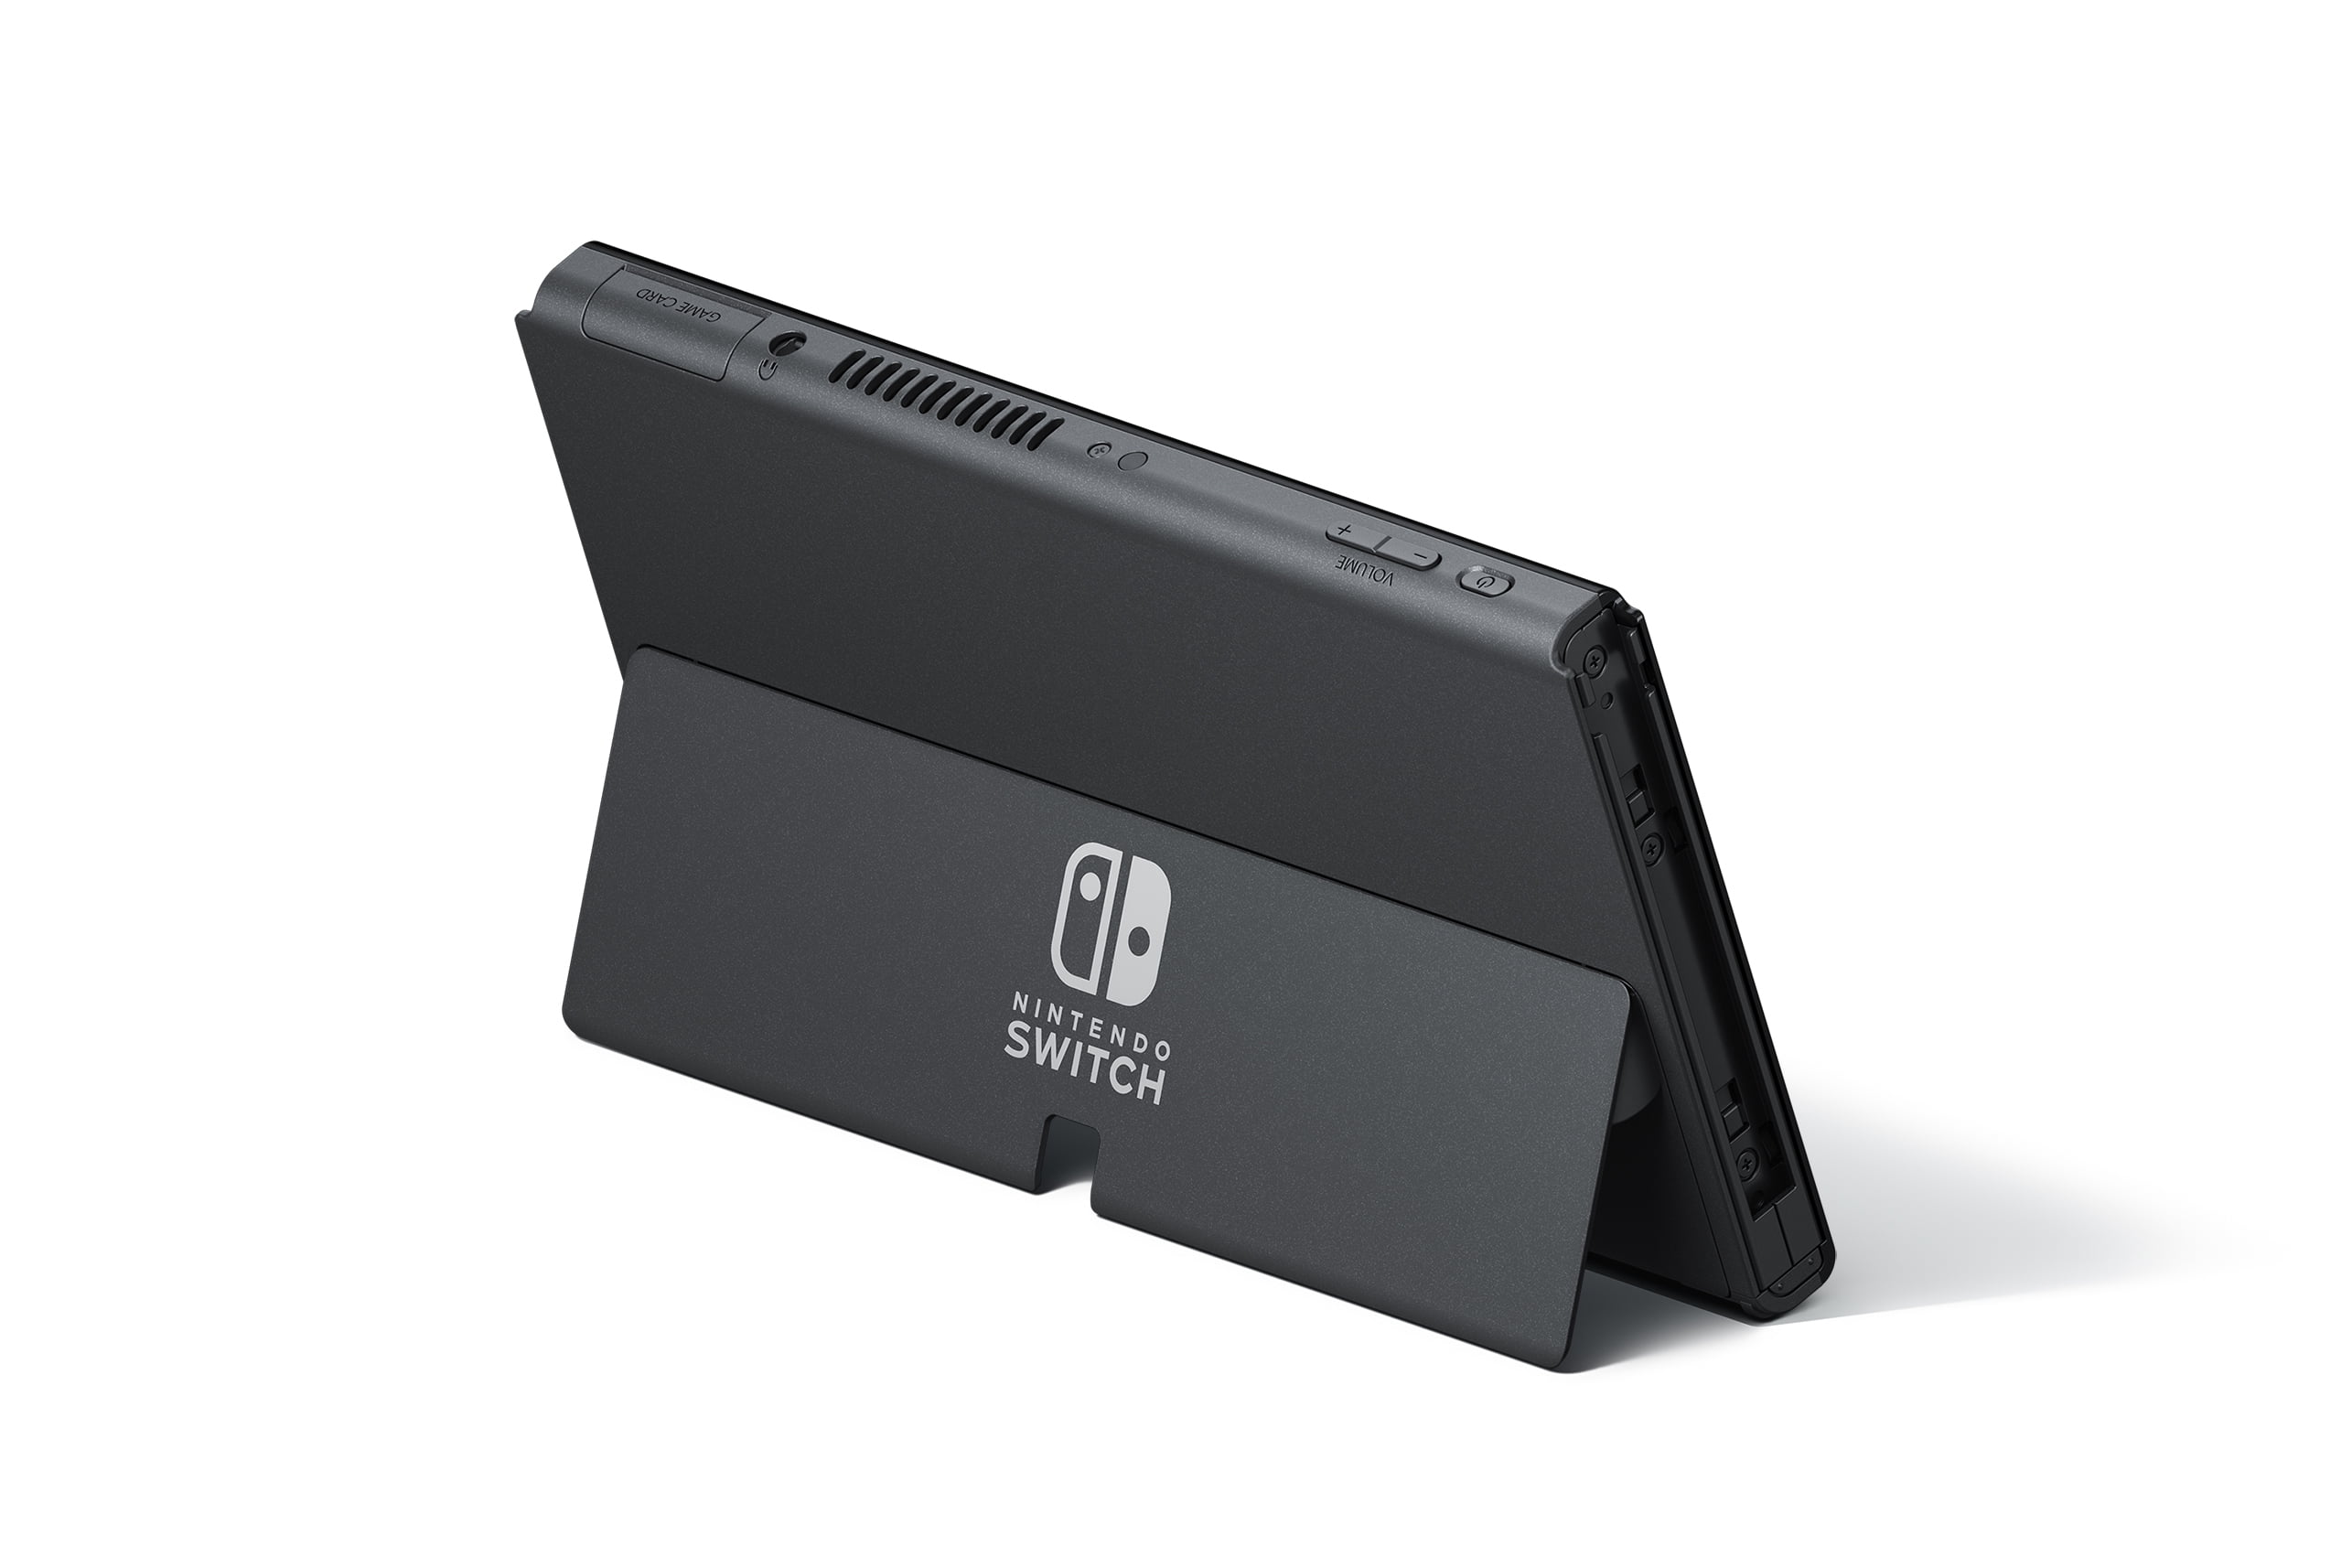 Nintendo Switch™ – OLED Model w/ White Joy-Con™ - Walmart.com